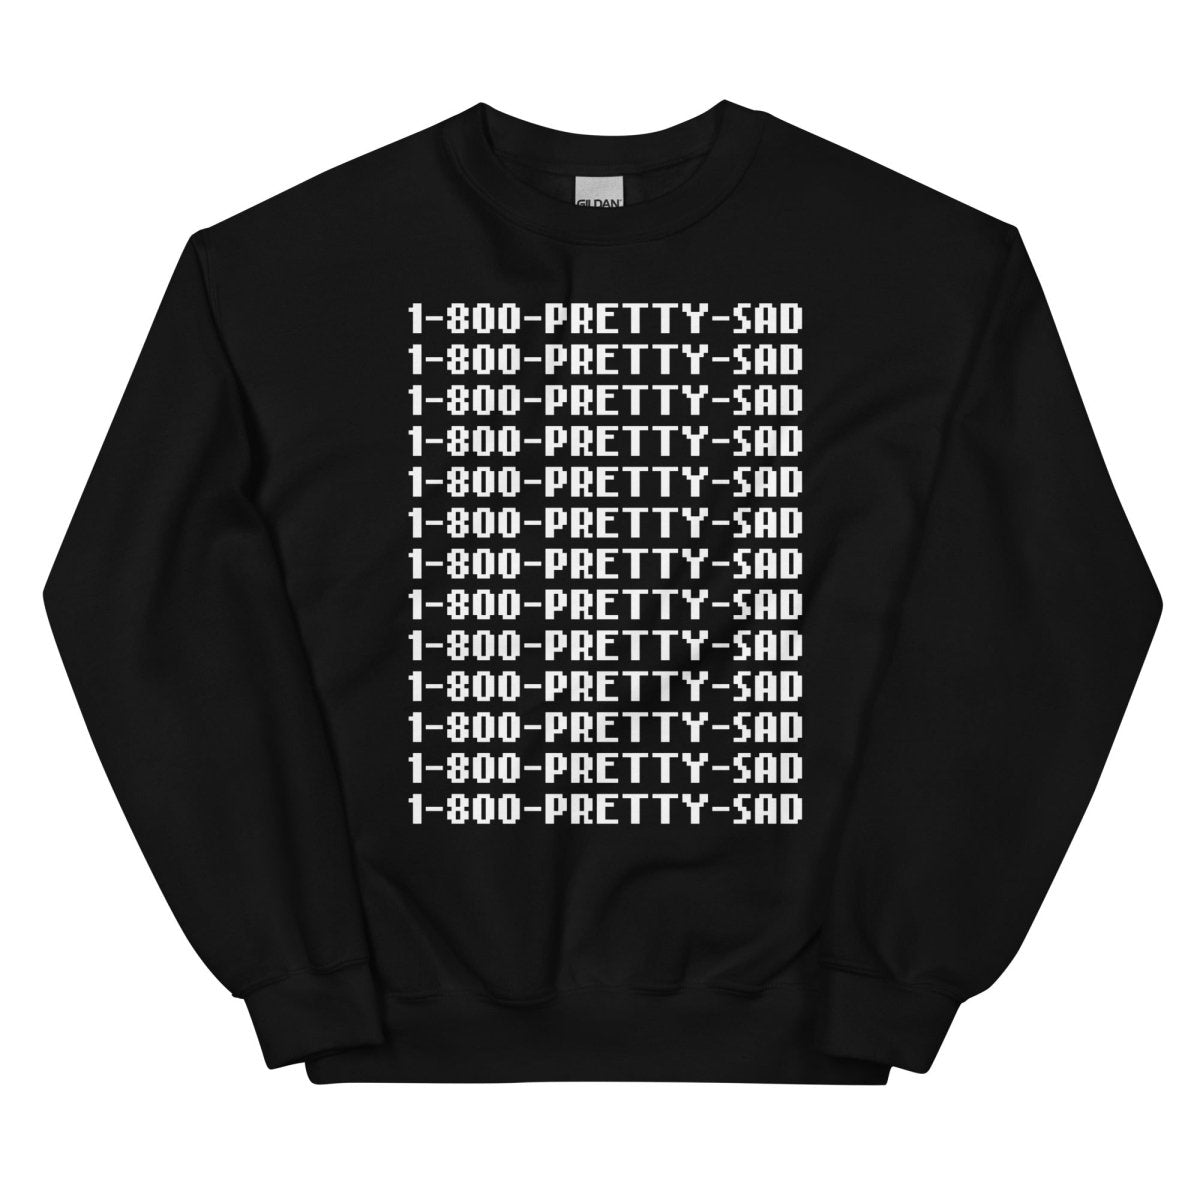 1-800-PRETTY-SAD Sweatshirt - Pretty Bad Co.